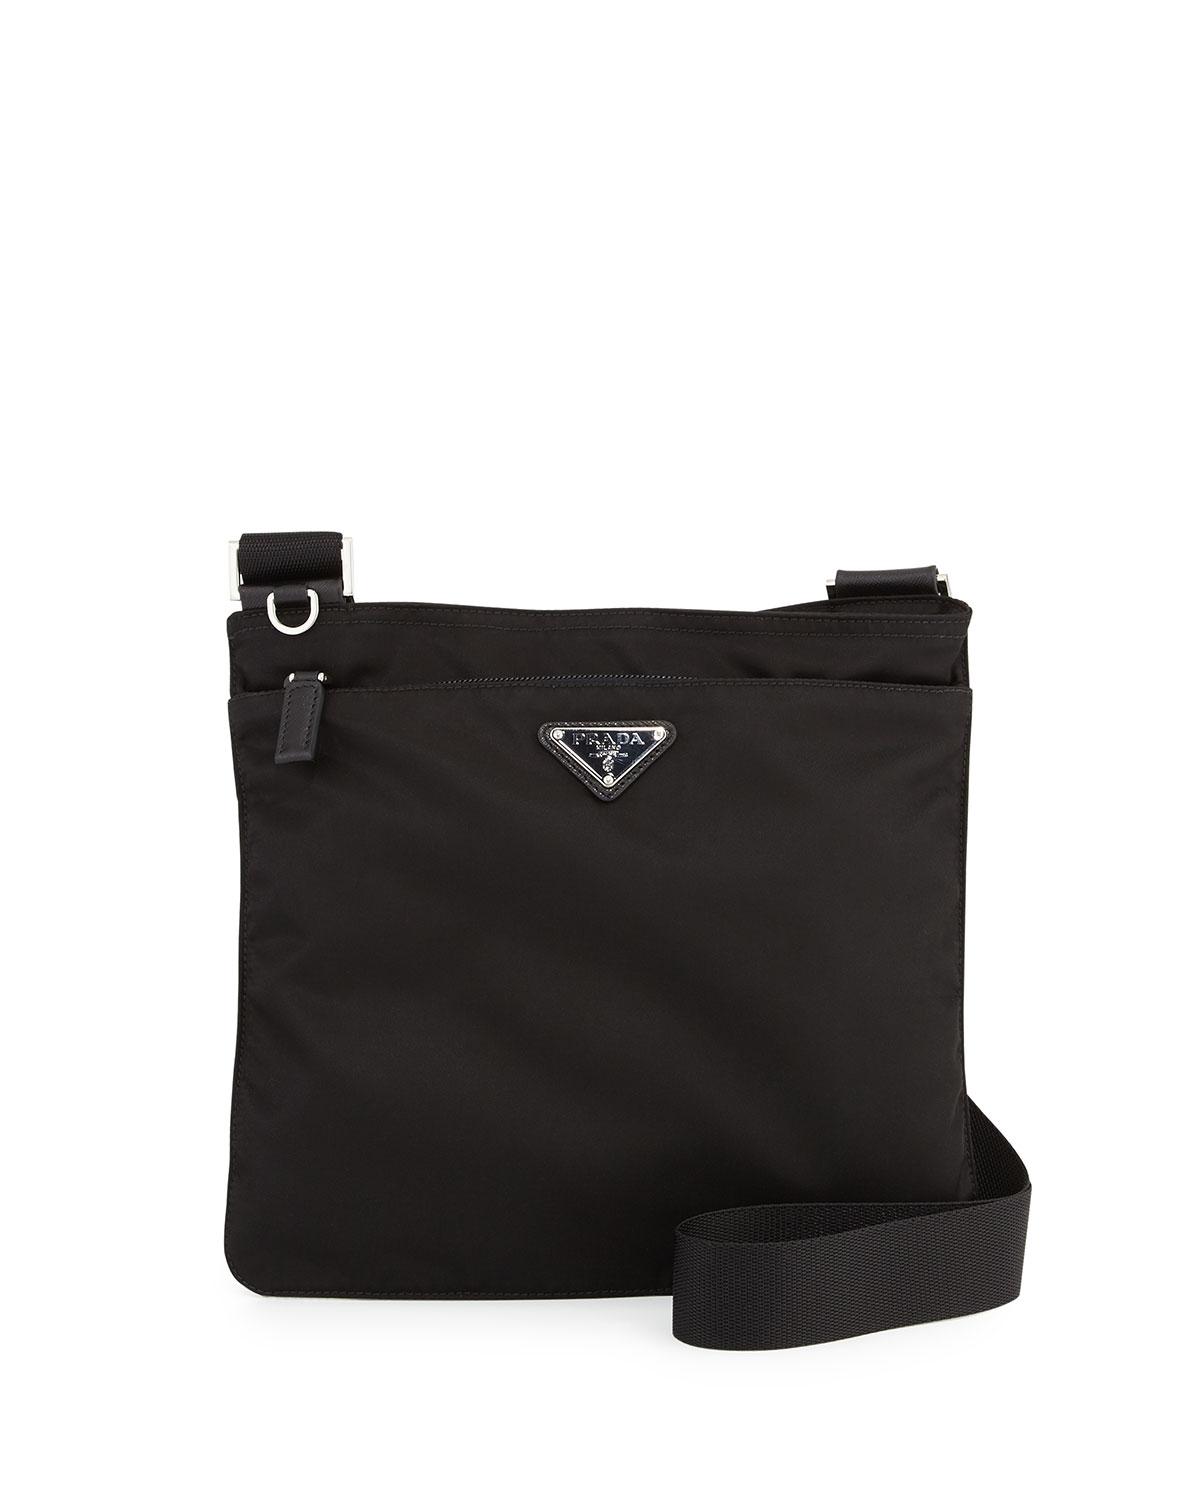 Prada Small Nylon Crossbody Bag in Black - Lyst